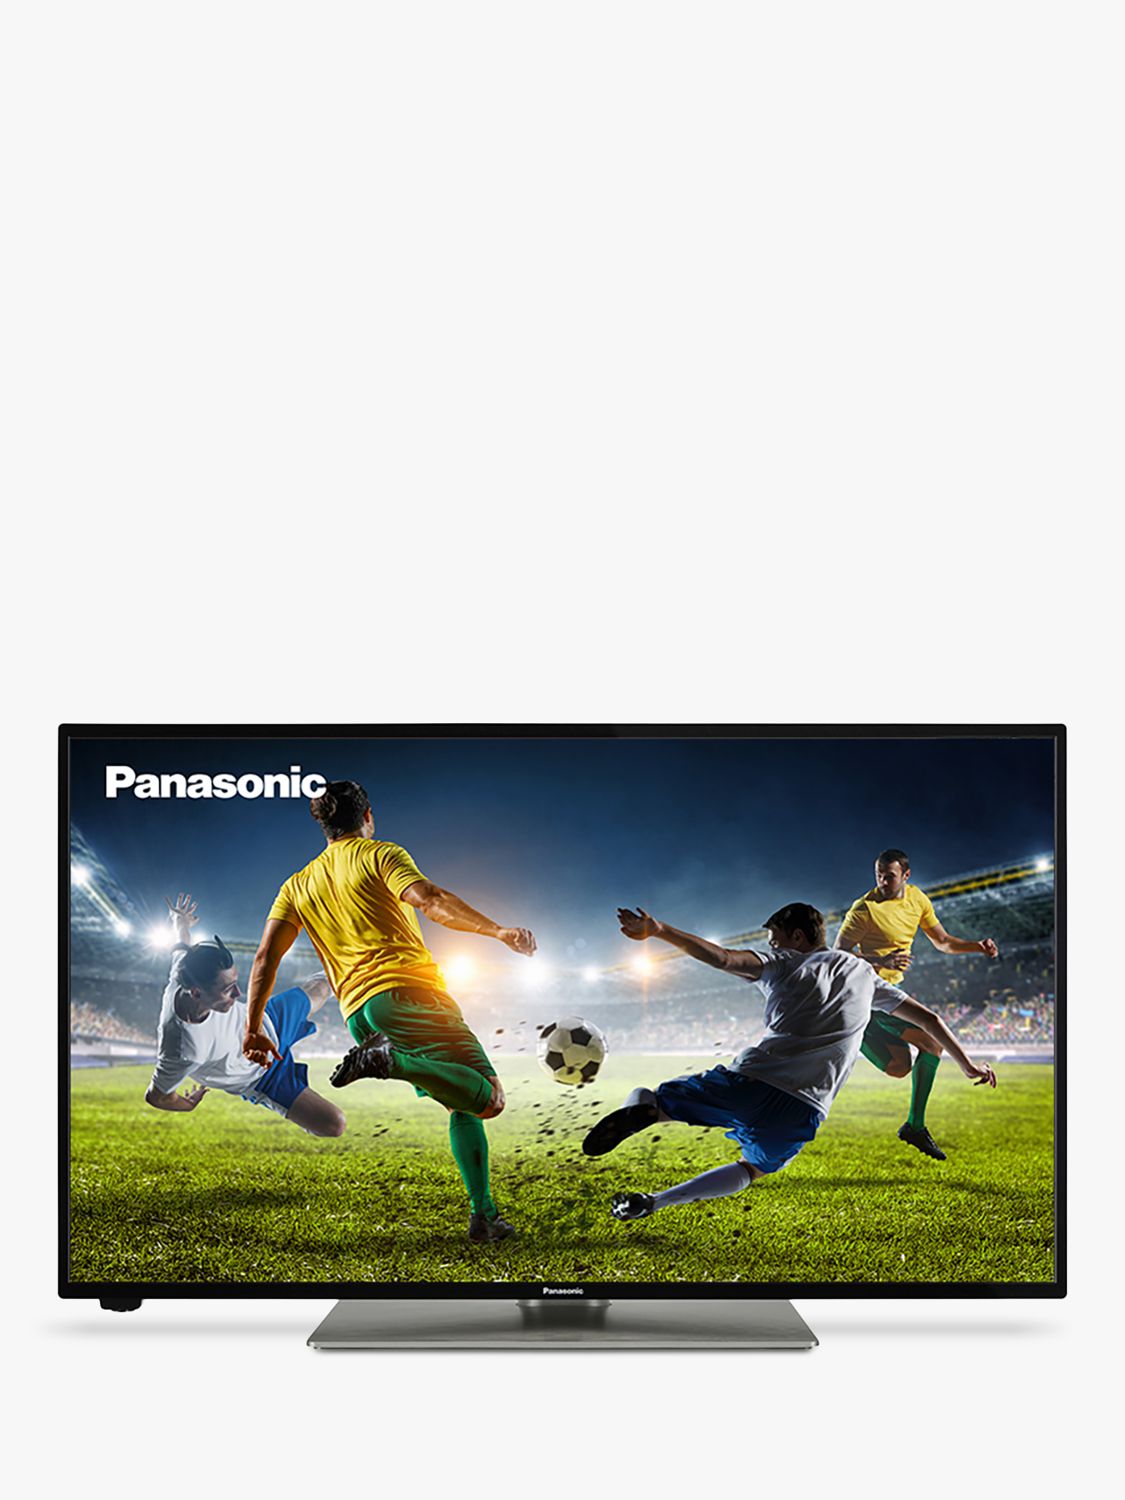 Panasonic TVs get free Viera Connect upgrade - CNET